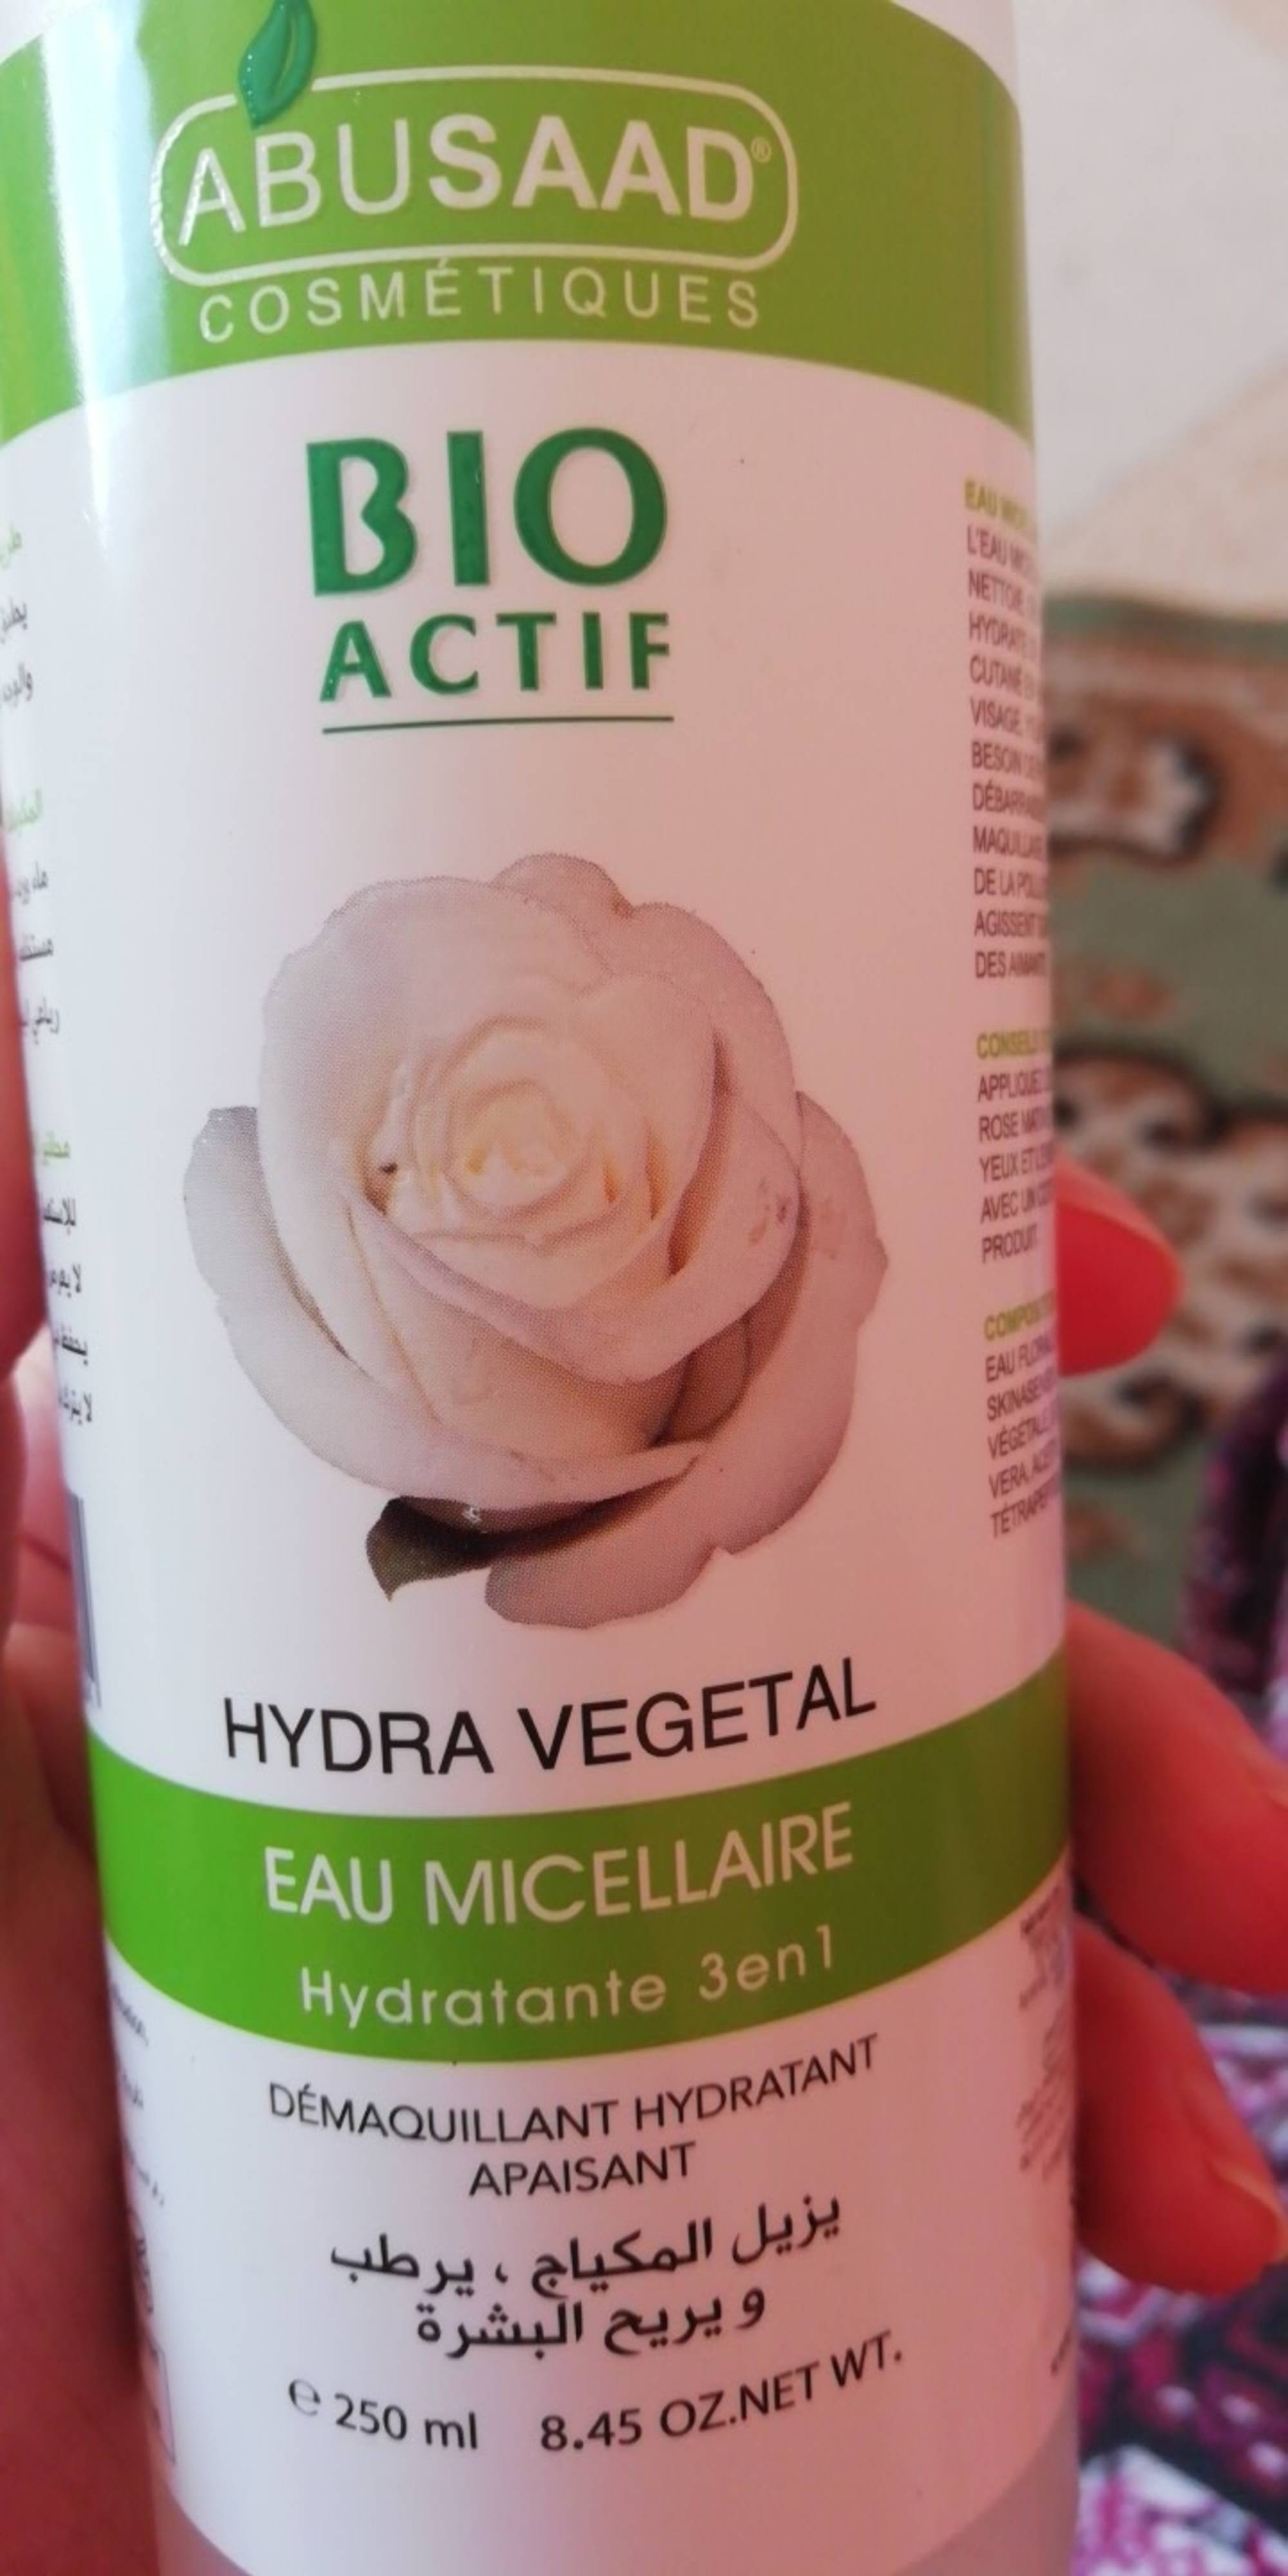 ABUSAAD - Bio actif - Hydra végétal, eau micéllaire